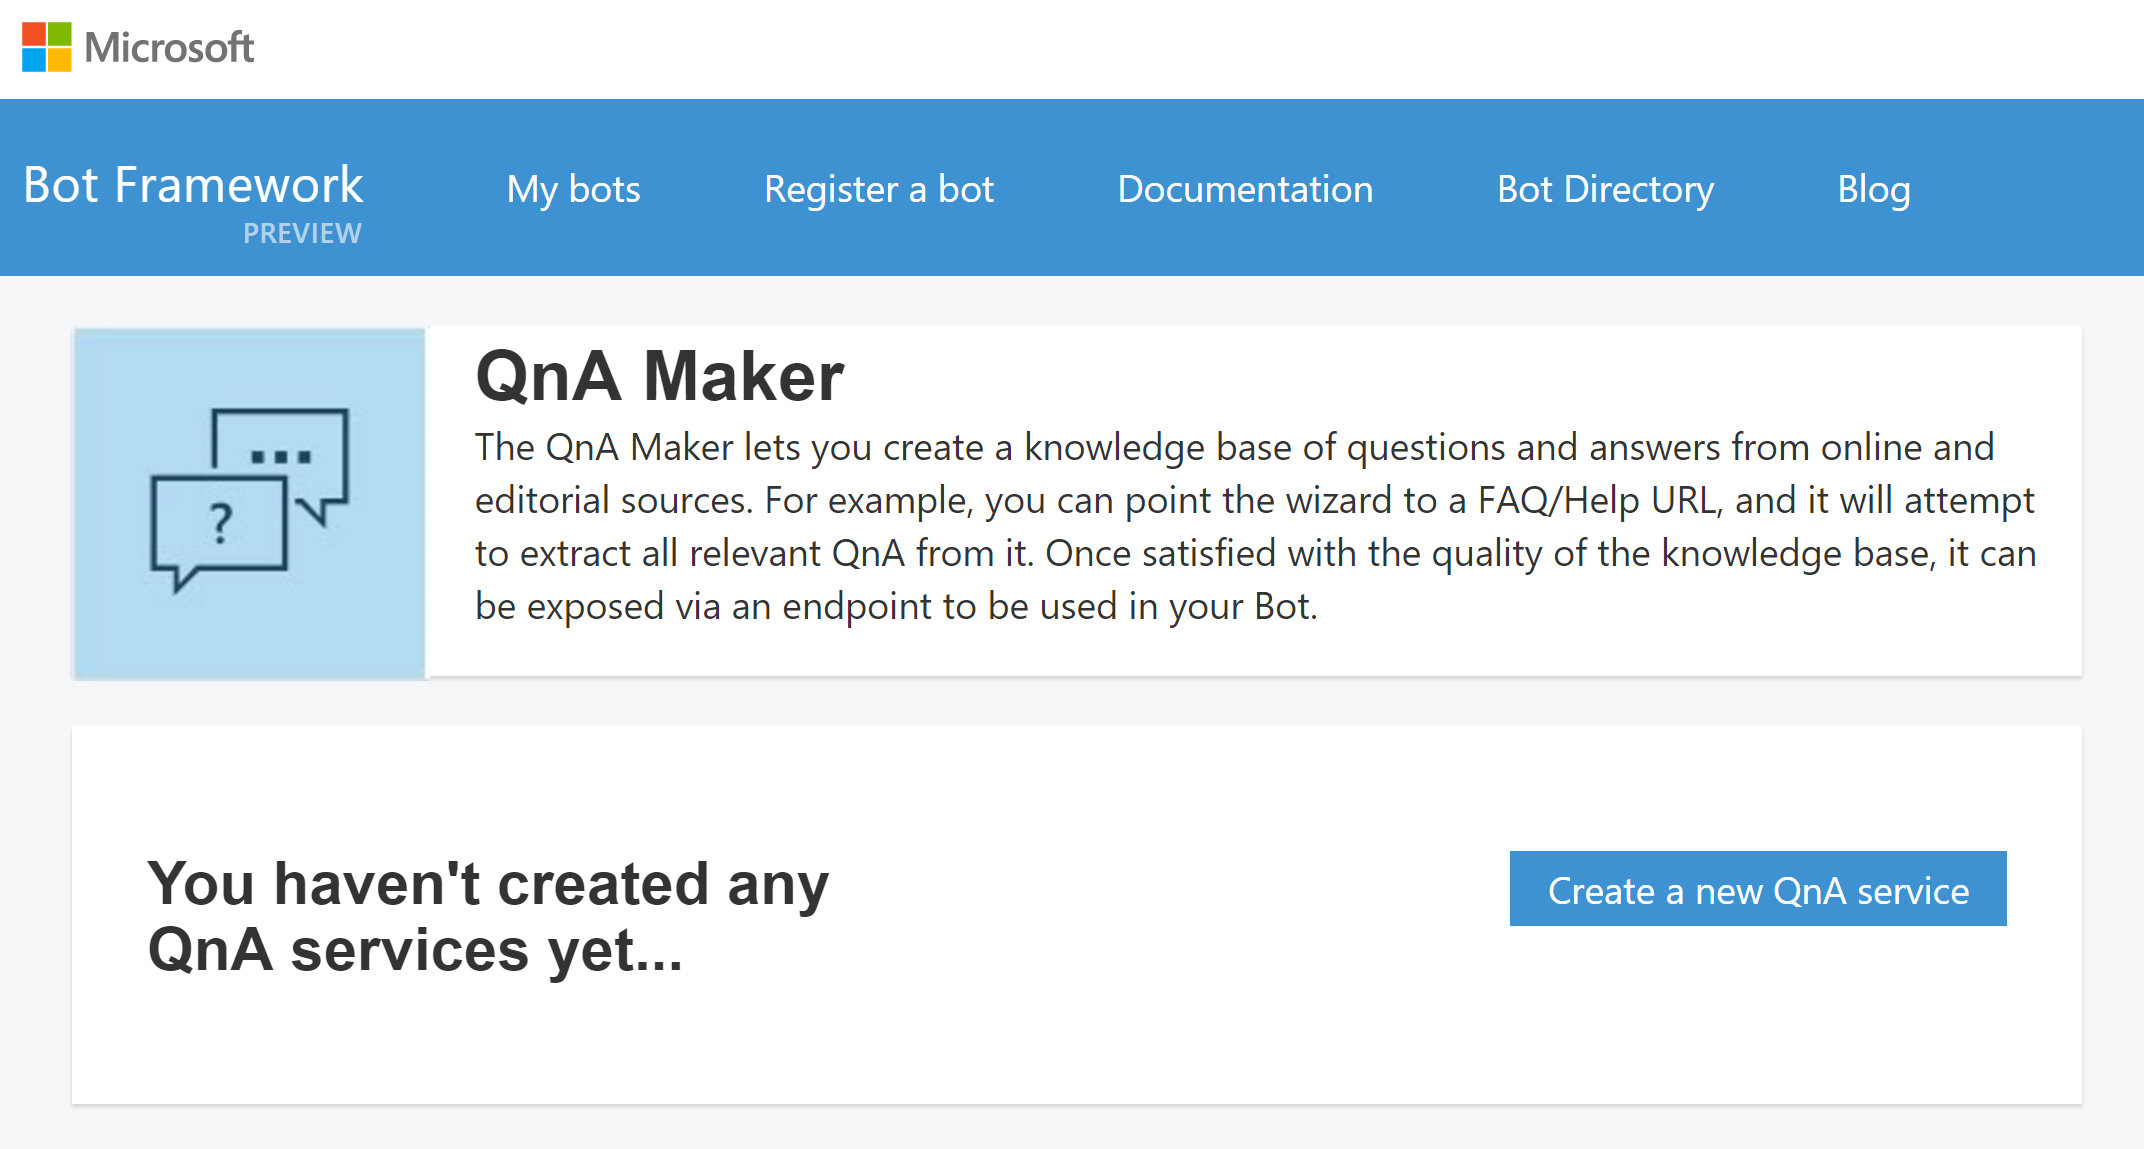 botframework QnA maker - Create new QnA service